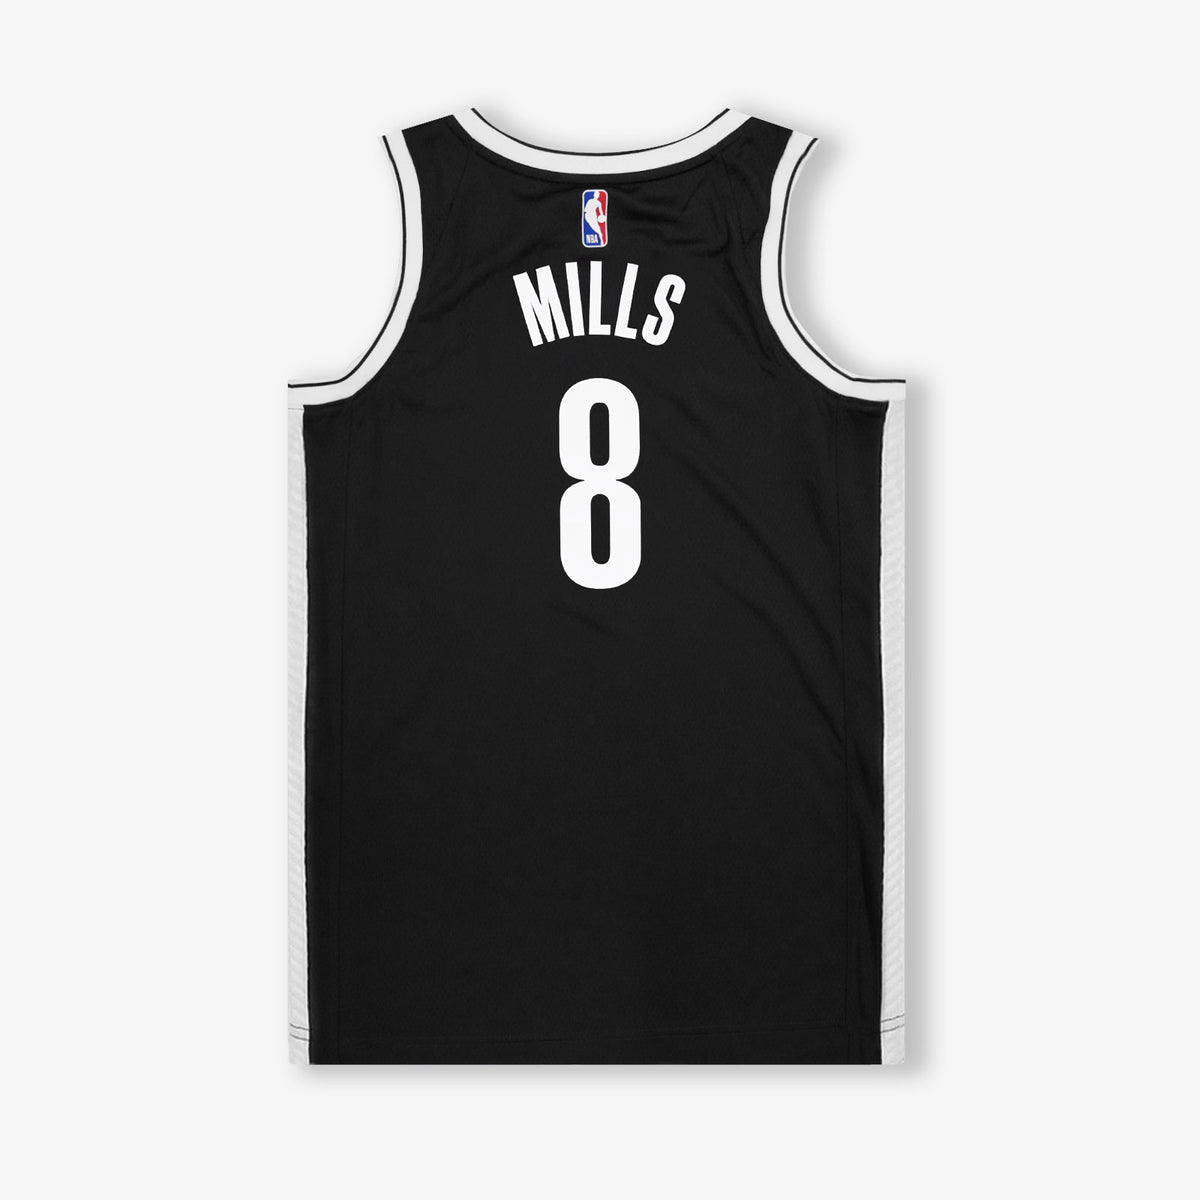 Patty Mills Brooklyn Nets Icon Edition Swingman Jersey - Black